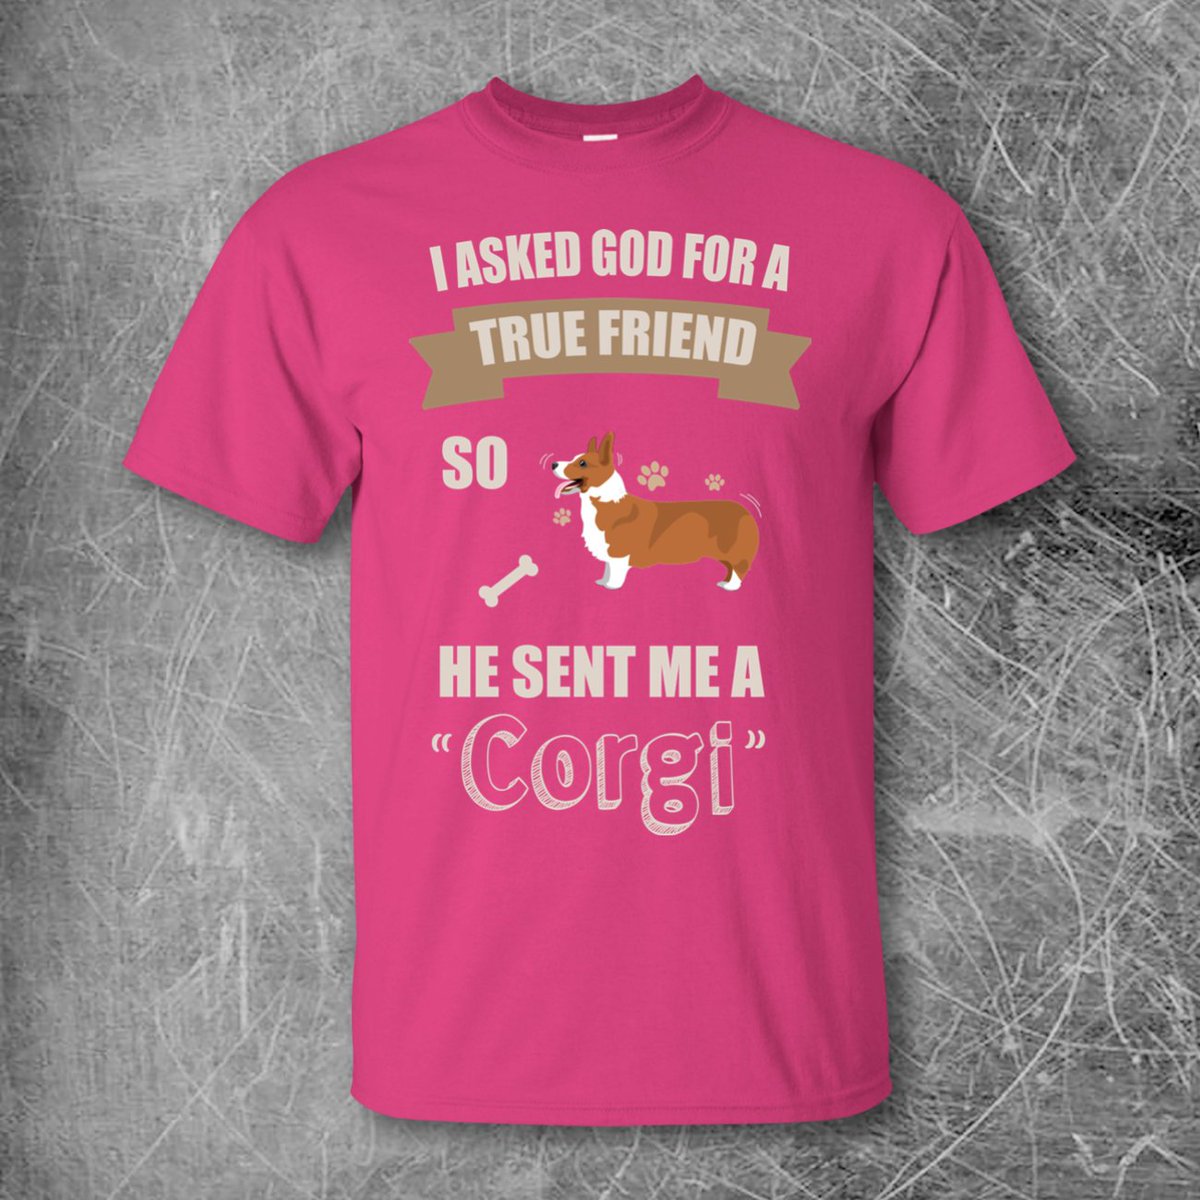 Corgi Tee Shirts Present Ideas, Corgi Dog Lover T-Shirts, Cool Corgies T Shirts Witty Sayings and Quotes etsy.me/2L4BDSk #corgit-shirt #corgishirt #corgitee #corgiteeshirt #corgitshirt #corgit-shirts #corgishirts #corgitees #corgiteeshirts #corgitshirts